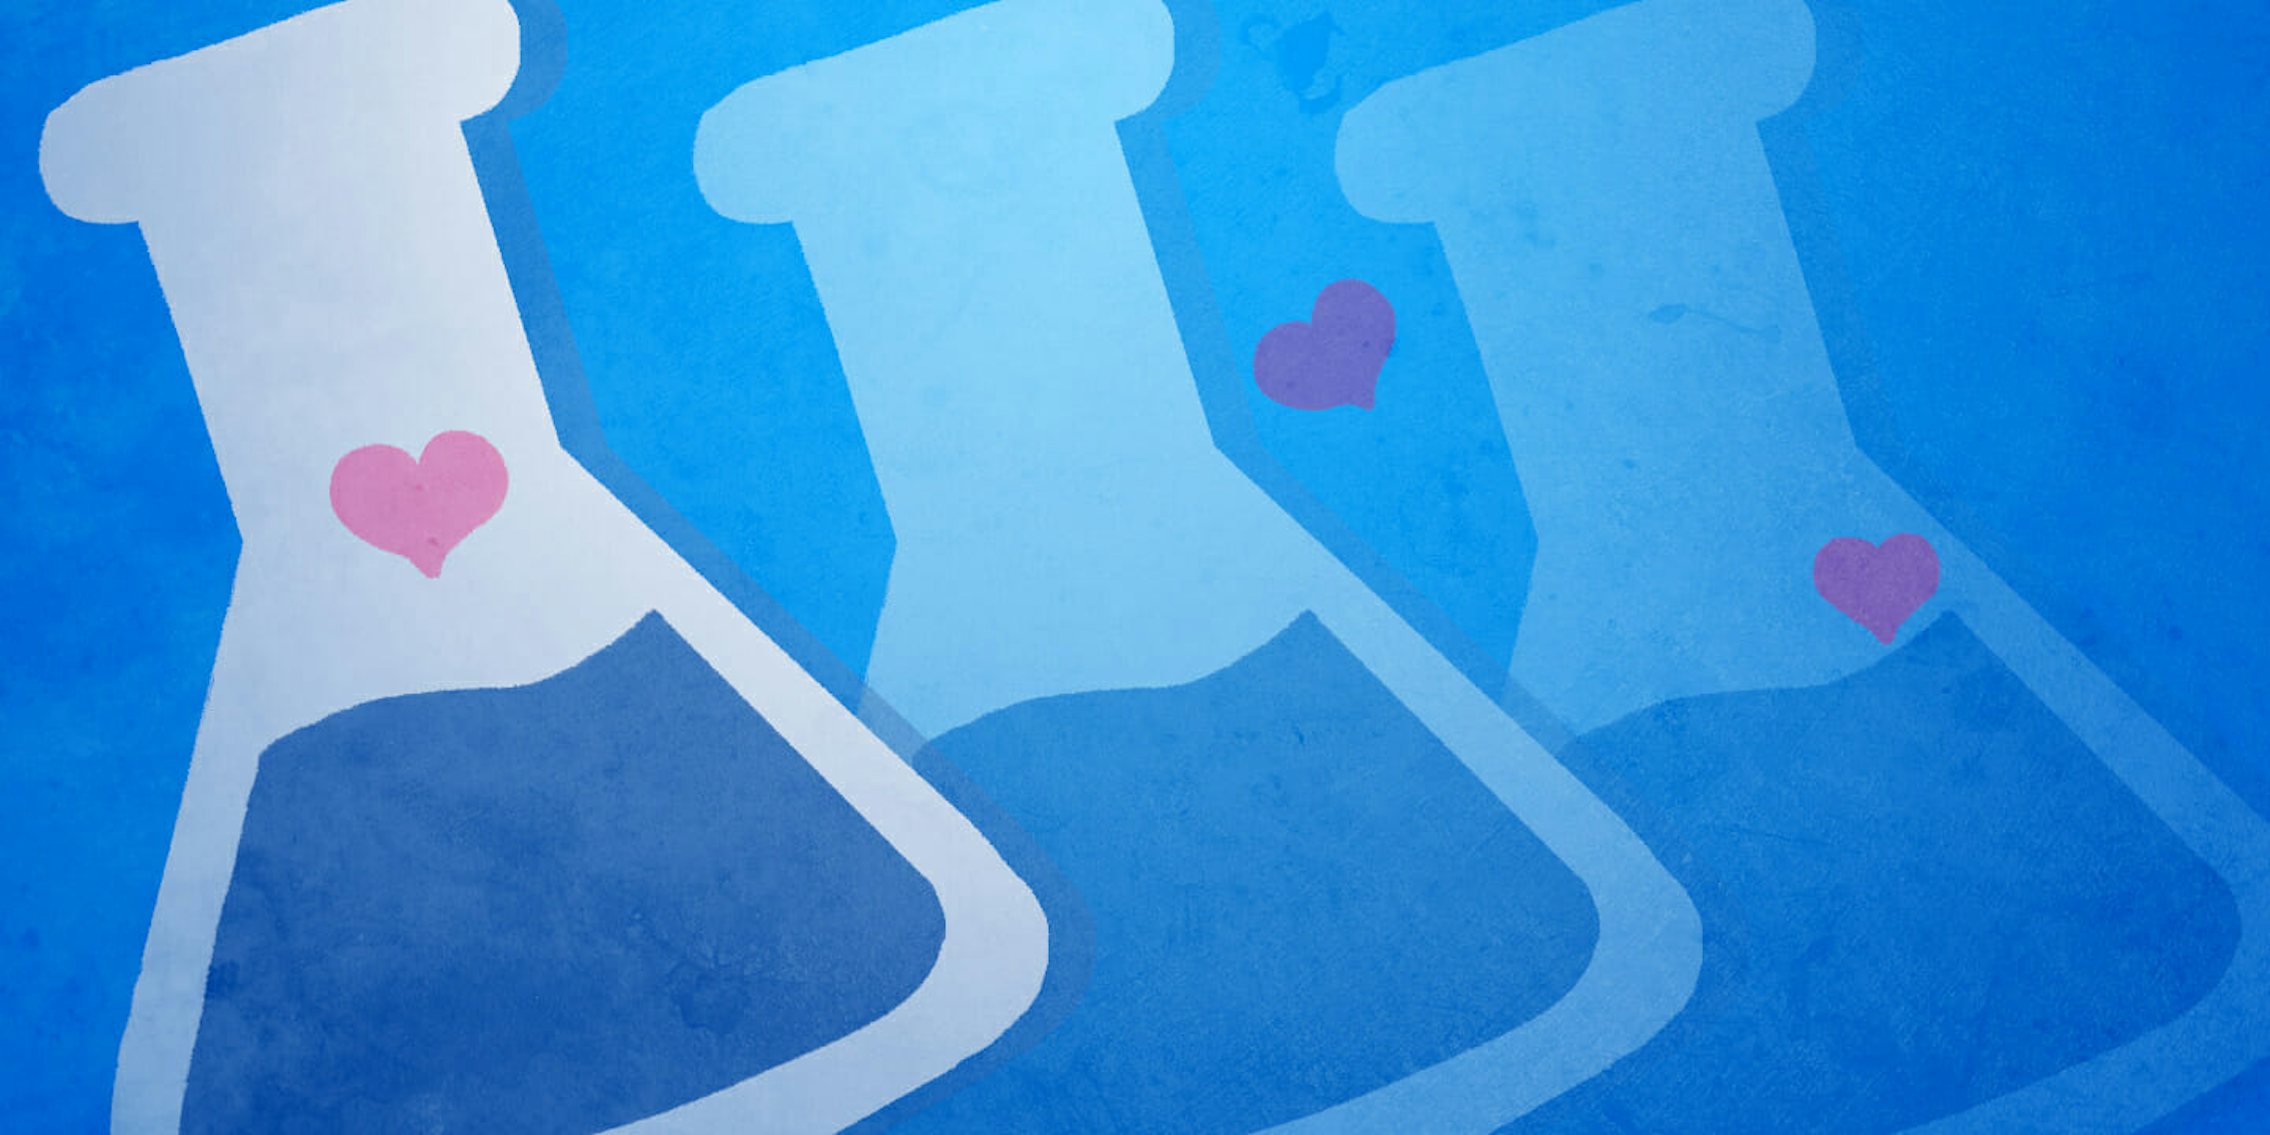 OKCupid stock art of beakers, love potion